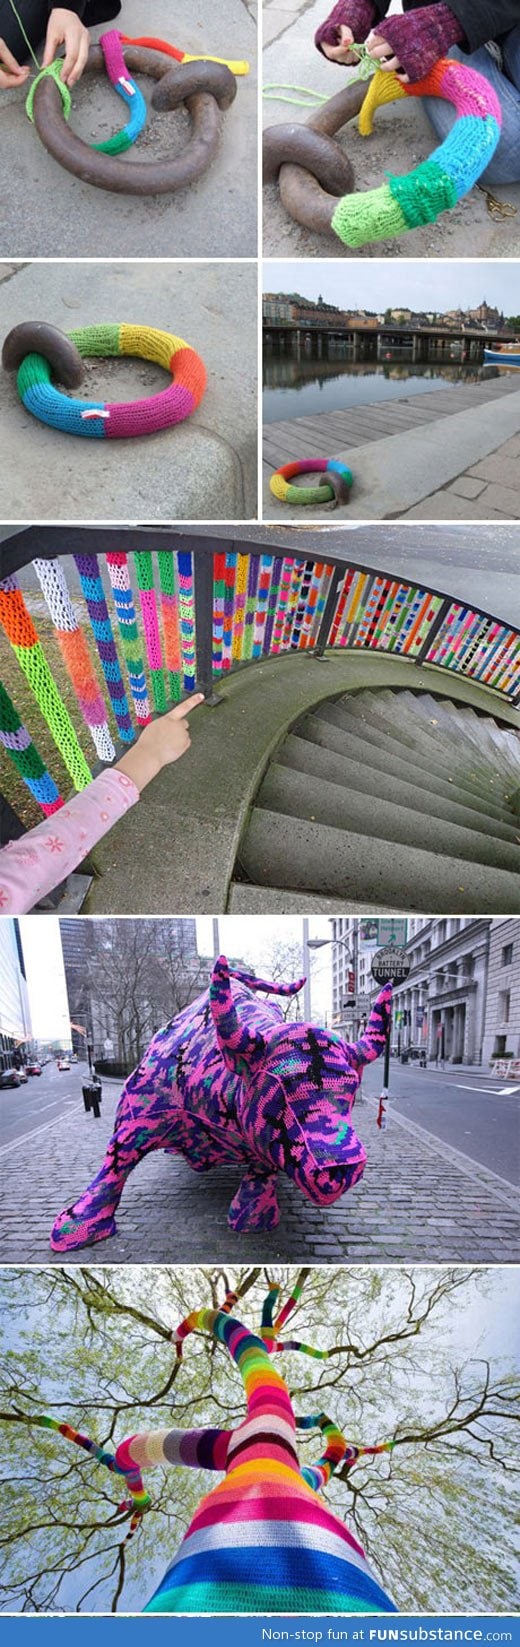 Massive yarn bombing in the city